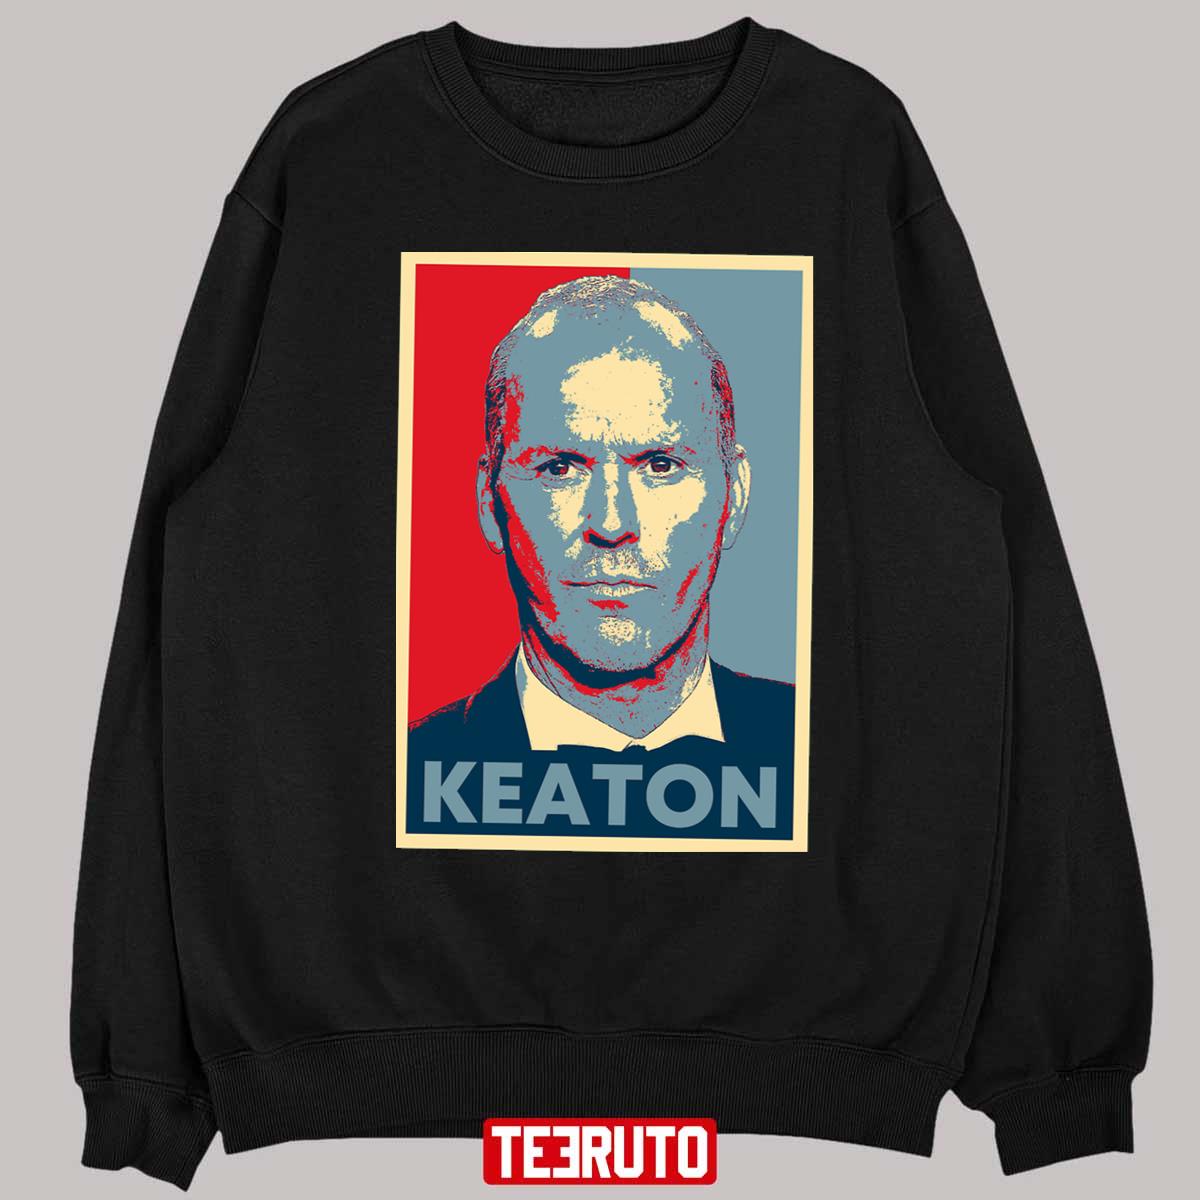 Michael Keaton Hope Graphic Unisex T-Shirt